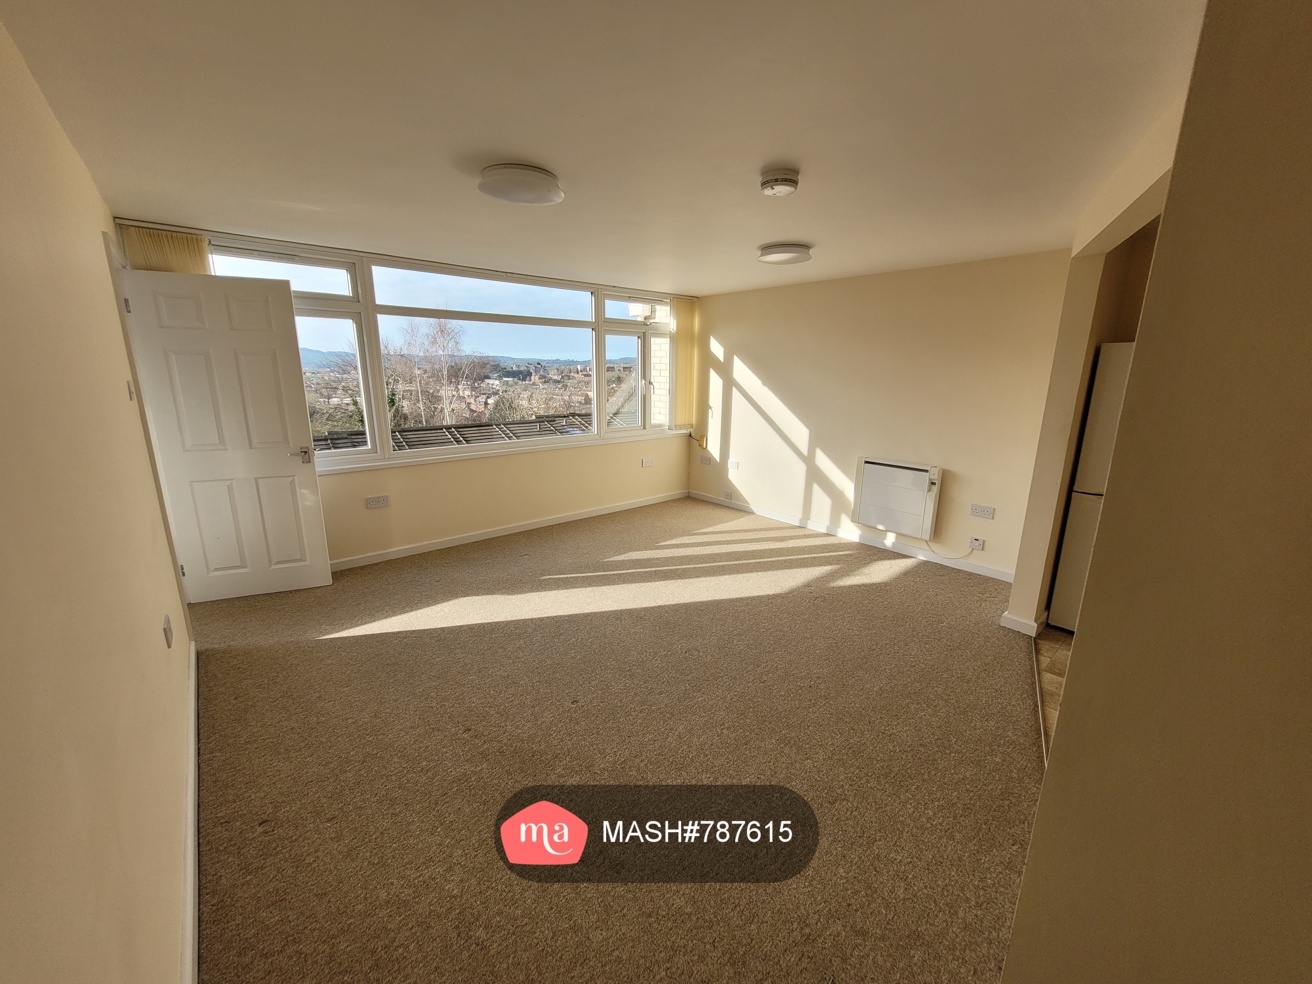 2 Bedroom Flat to rent in Exeter - Mashroom